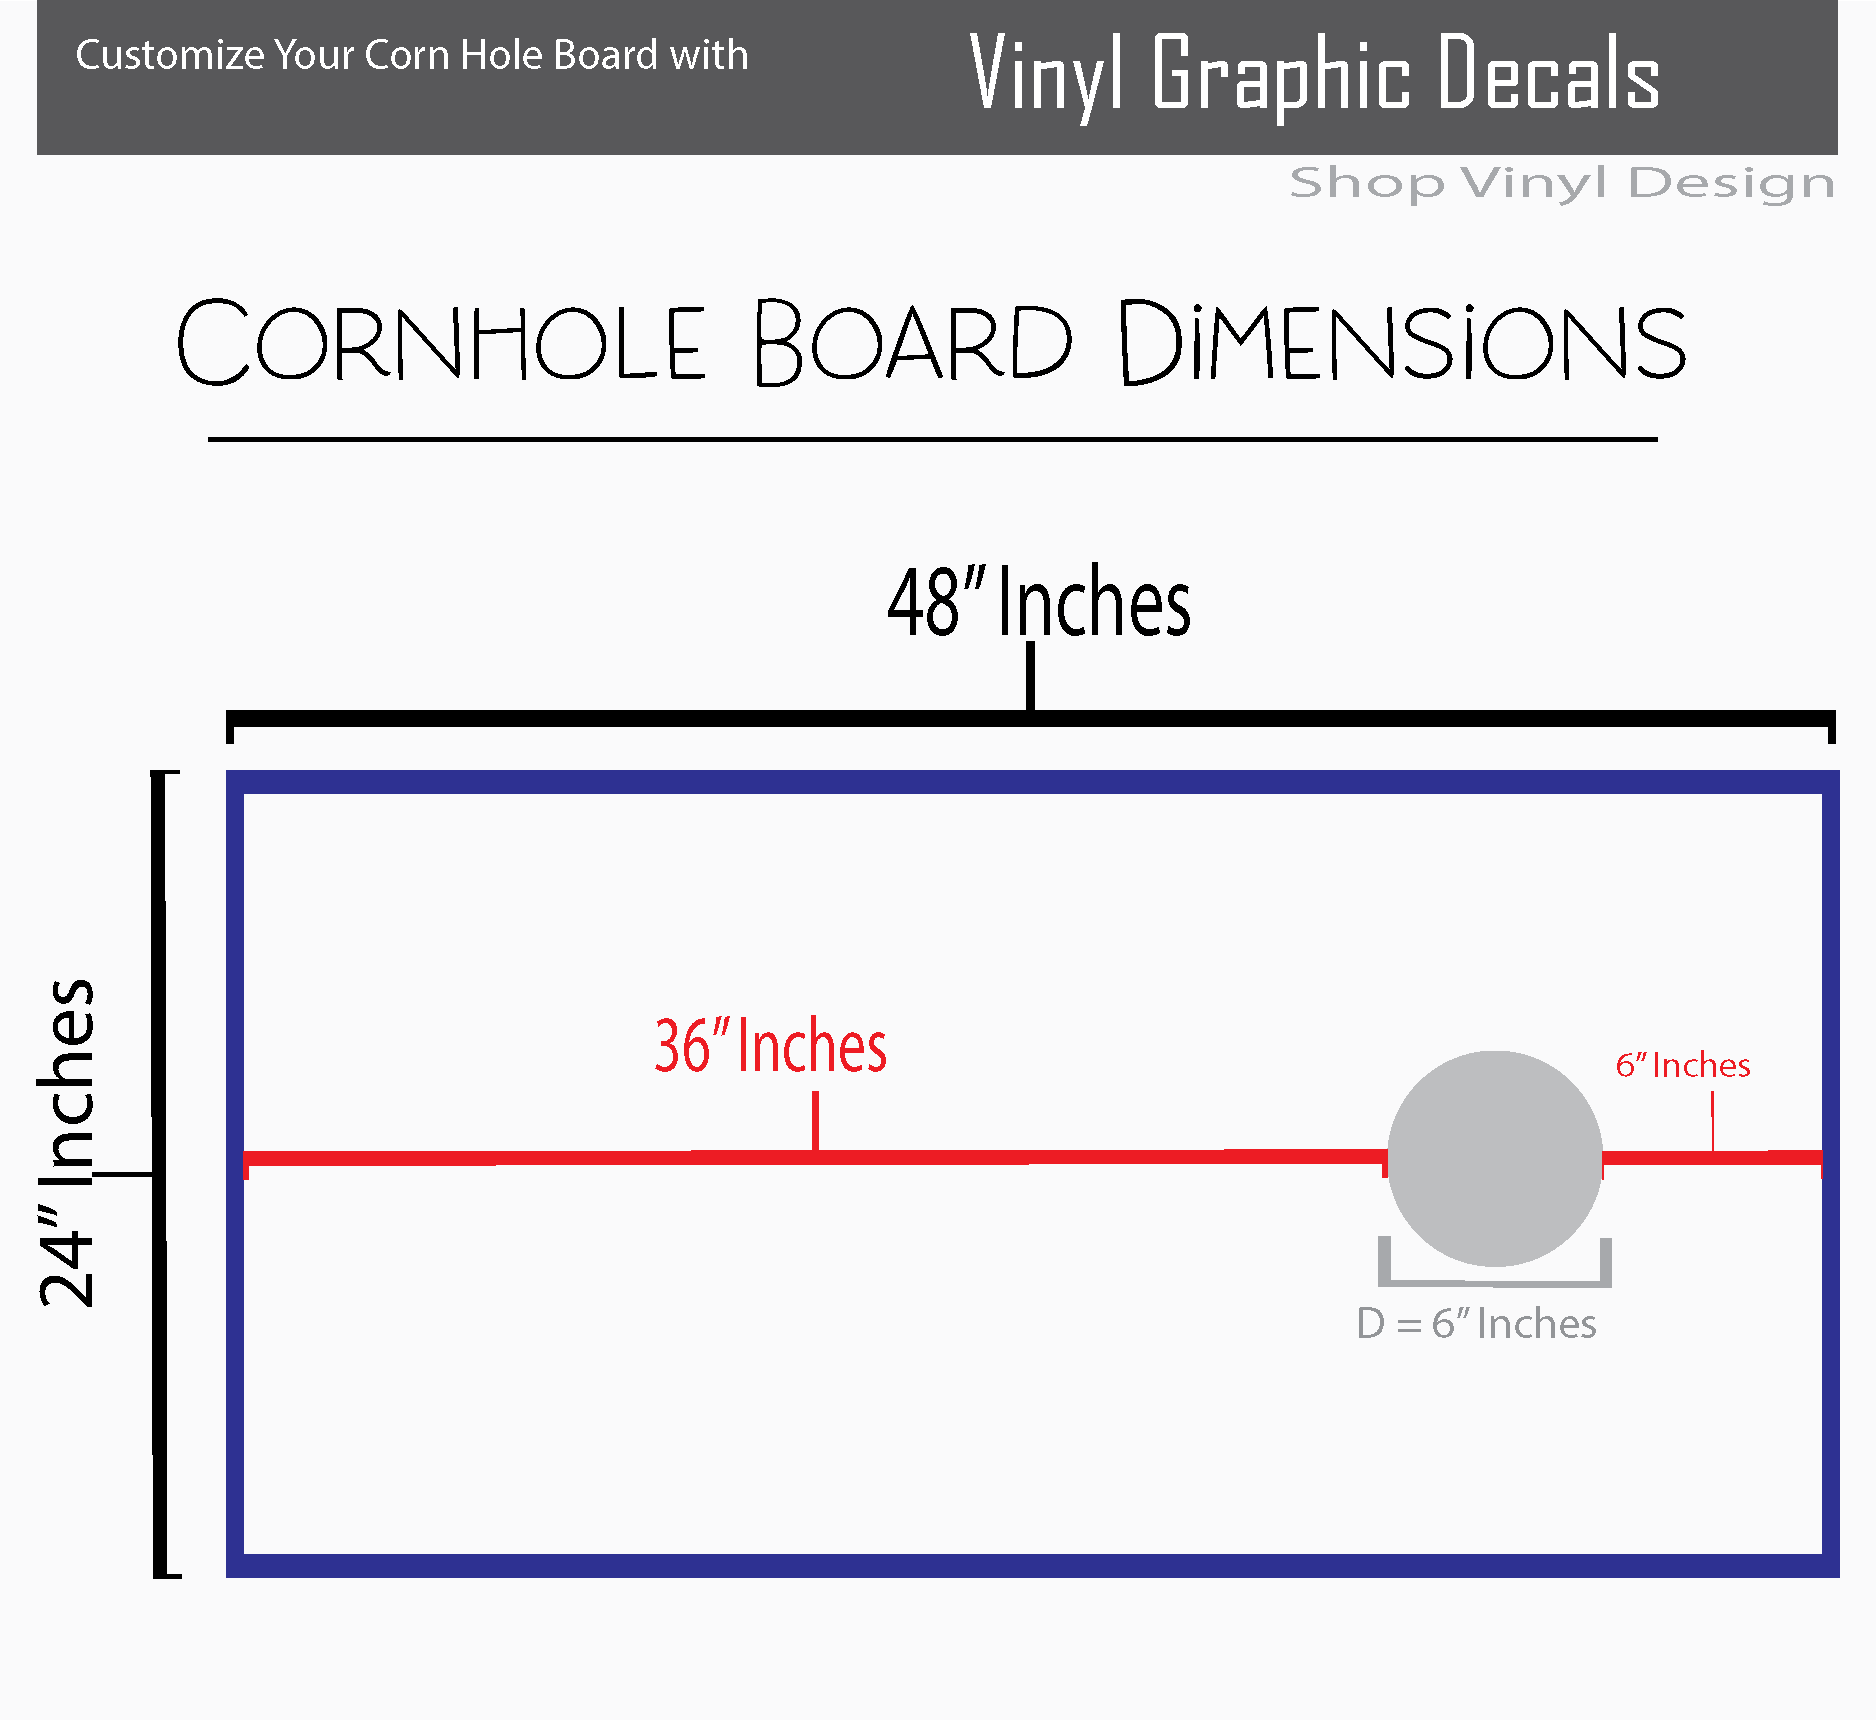 ShopVinylDesignStore.com St. Bernard and Custom Text for Corn Hole Boards Wide Style 19 Shop Vinyl Design decals stickers